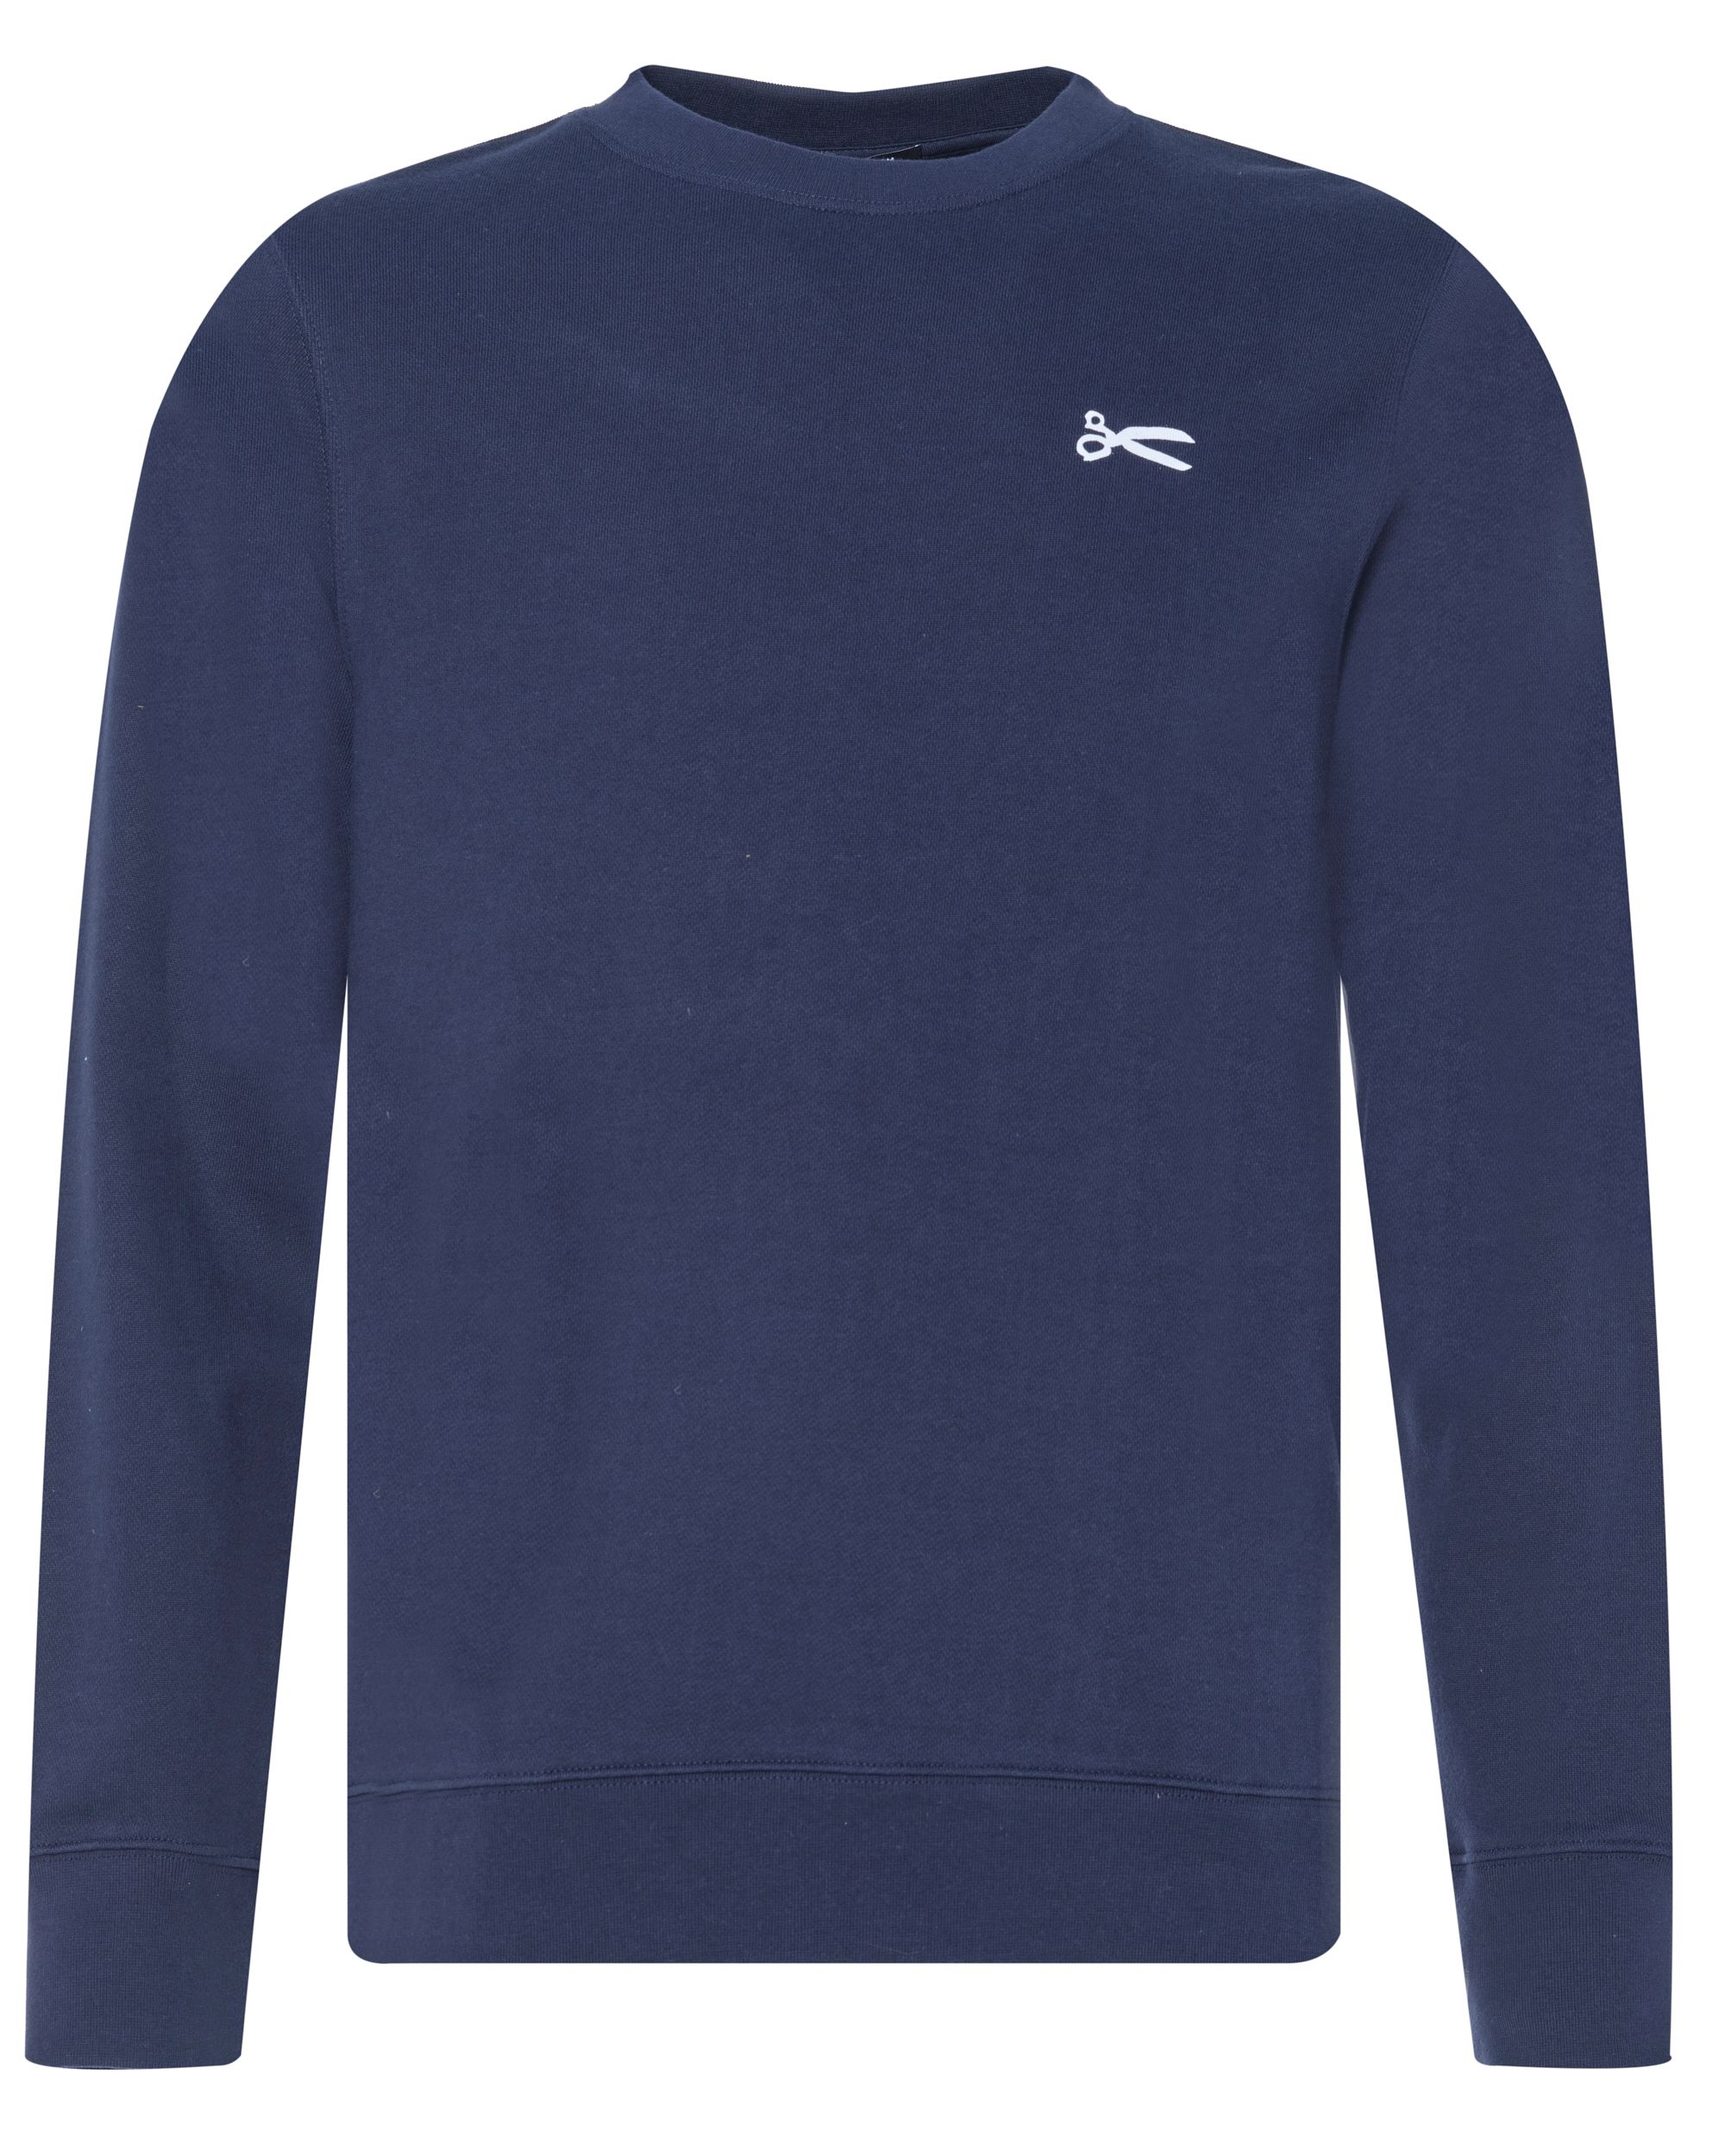 DENHAM Avon Sweater Donker blauw 081325-001-L